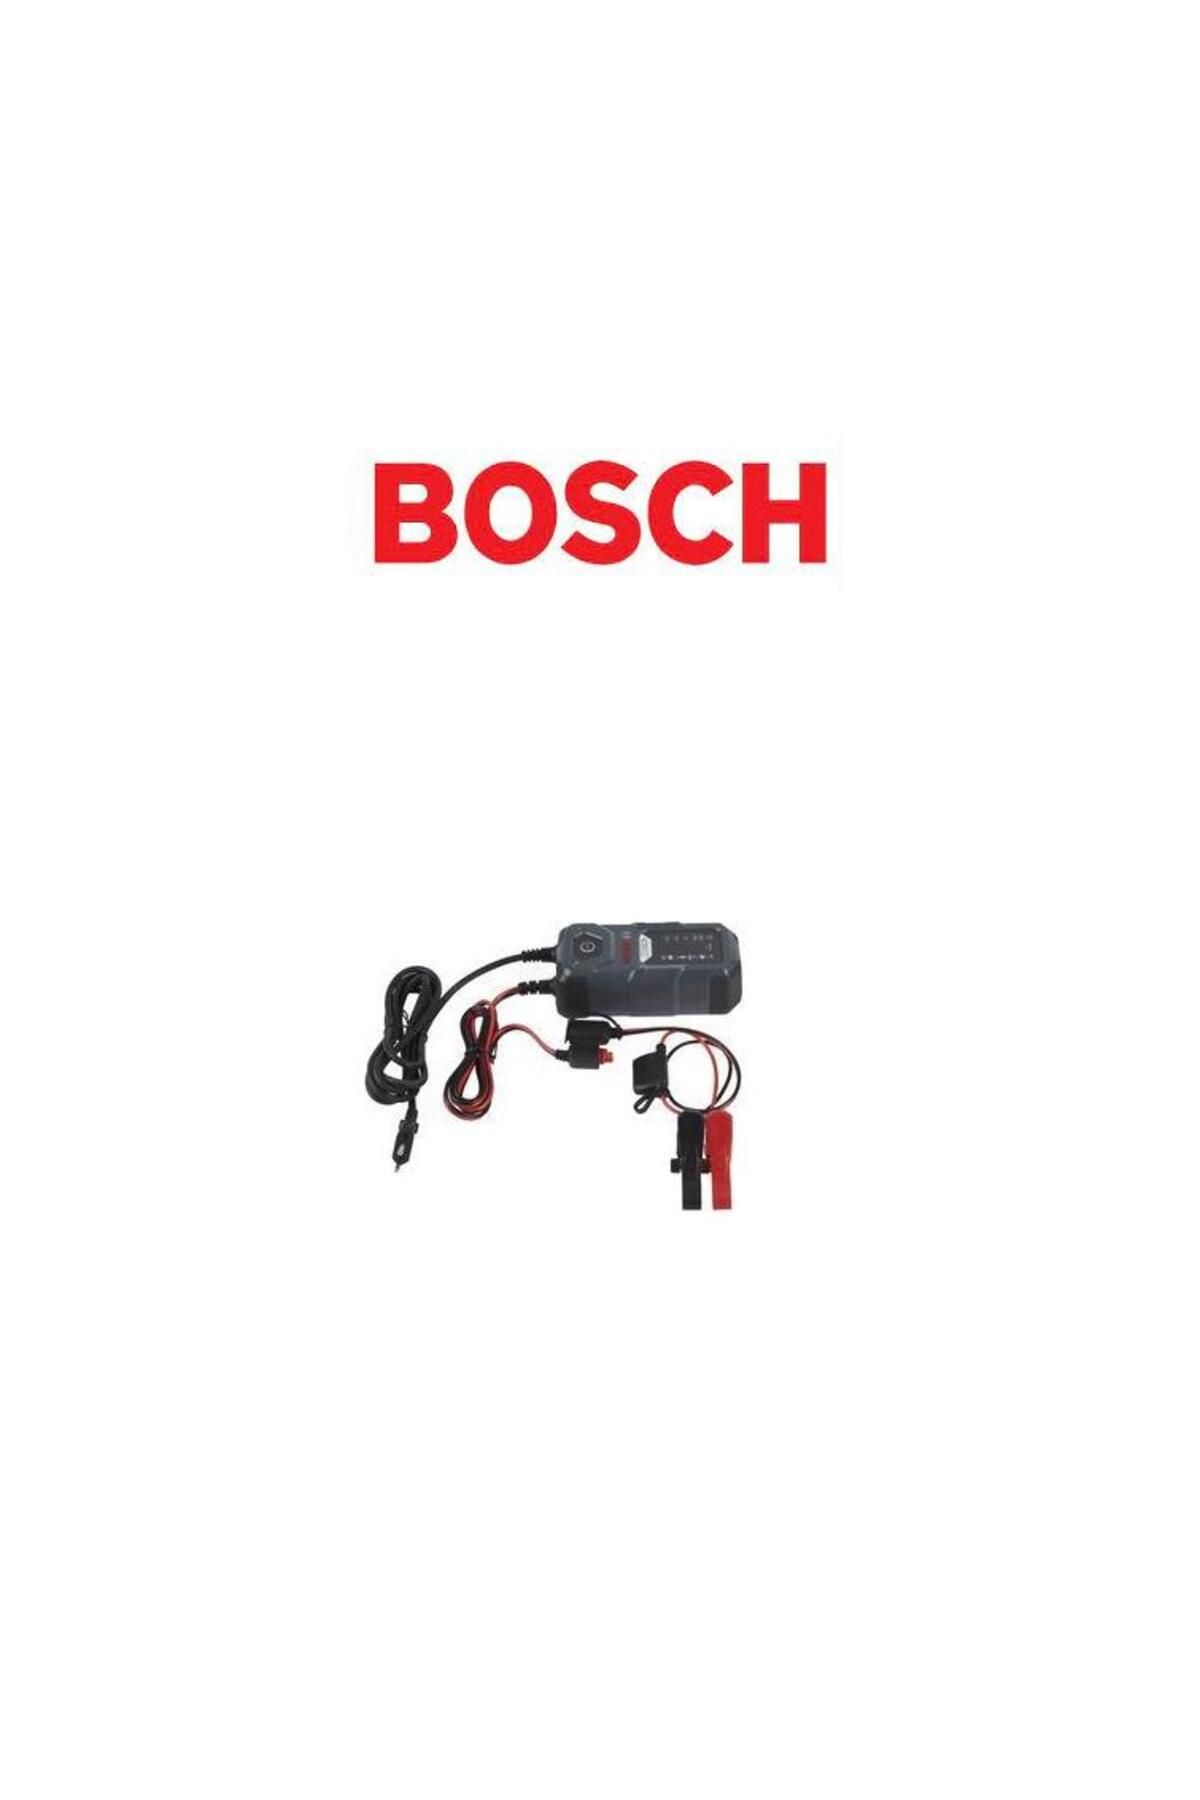 Bosch AKÜ ŞARJ CİHAZI C30 6V / 12V 3,8A 0189911030 BOSCH